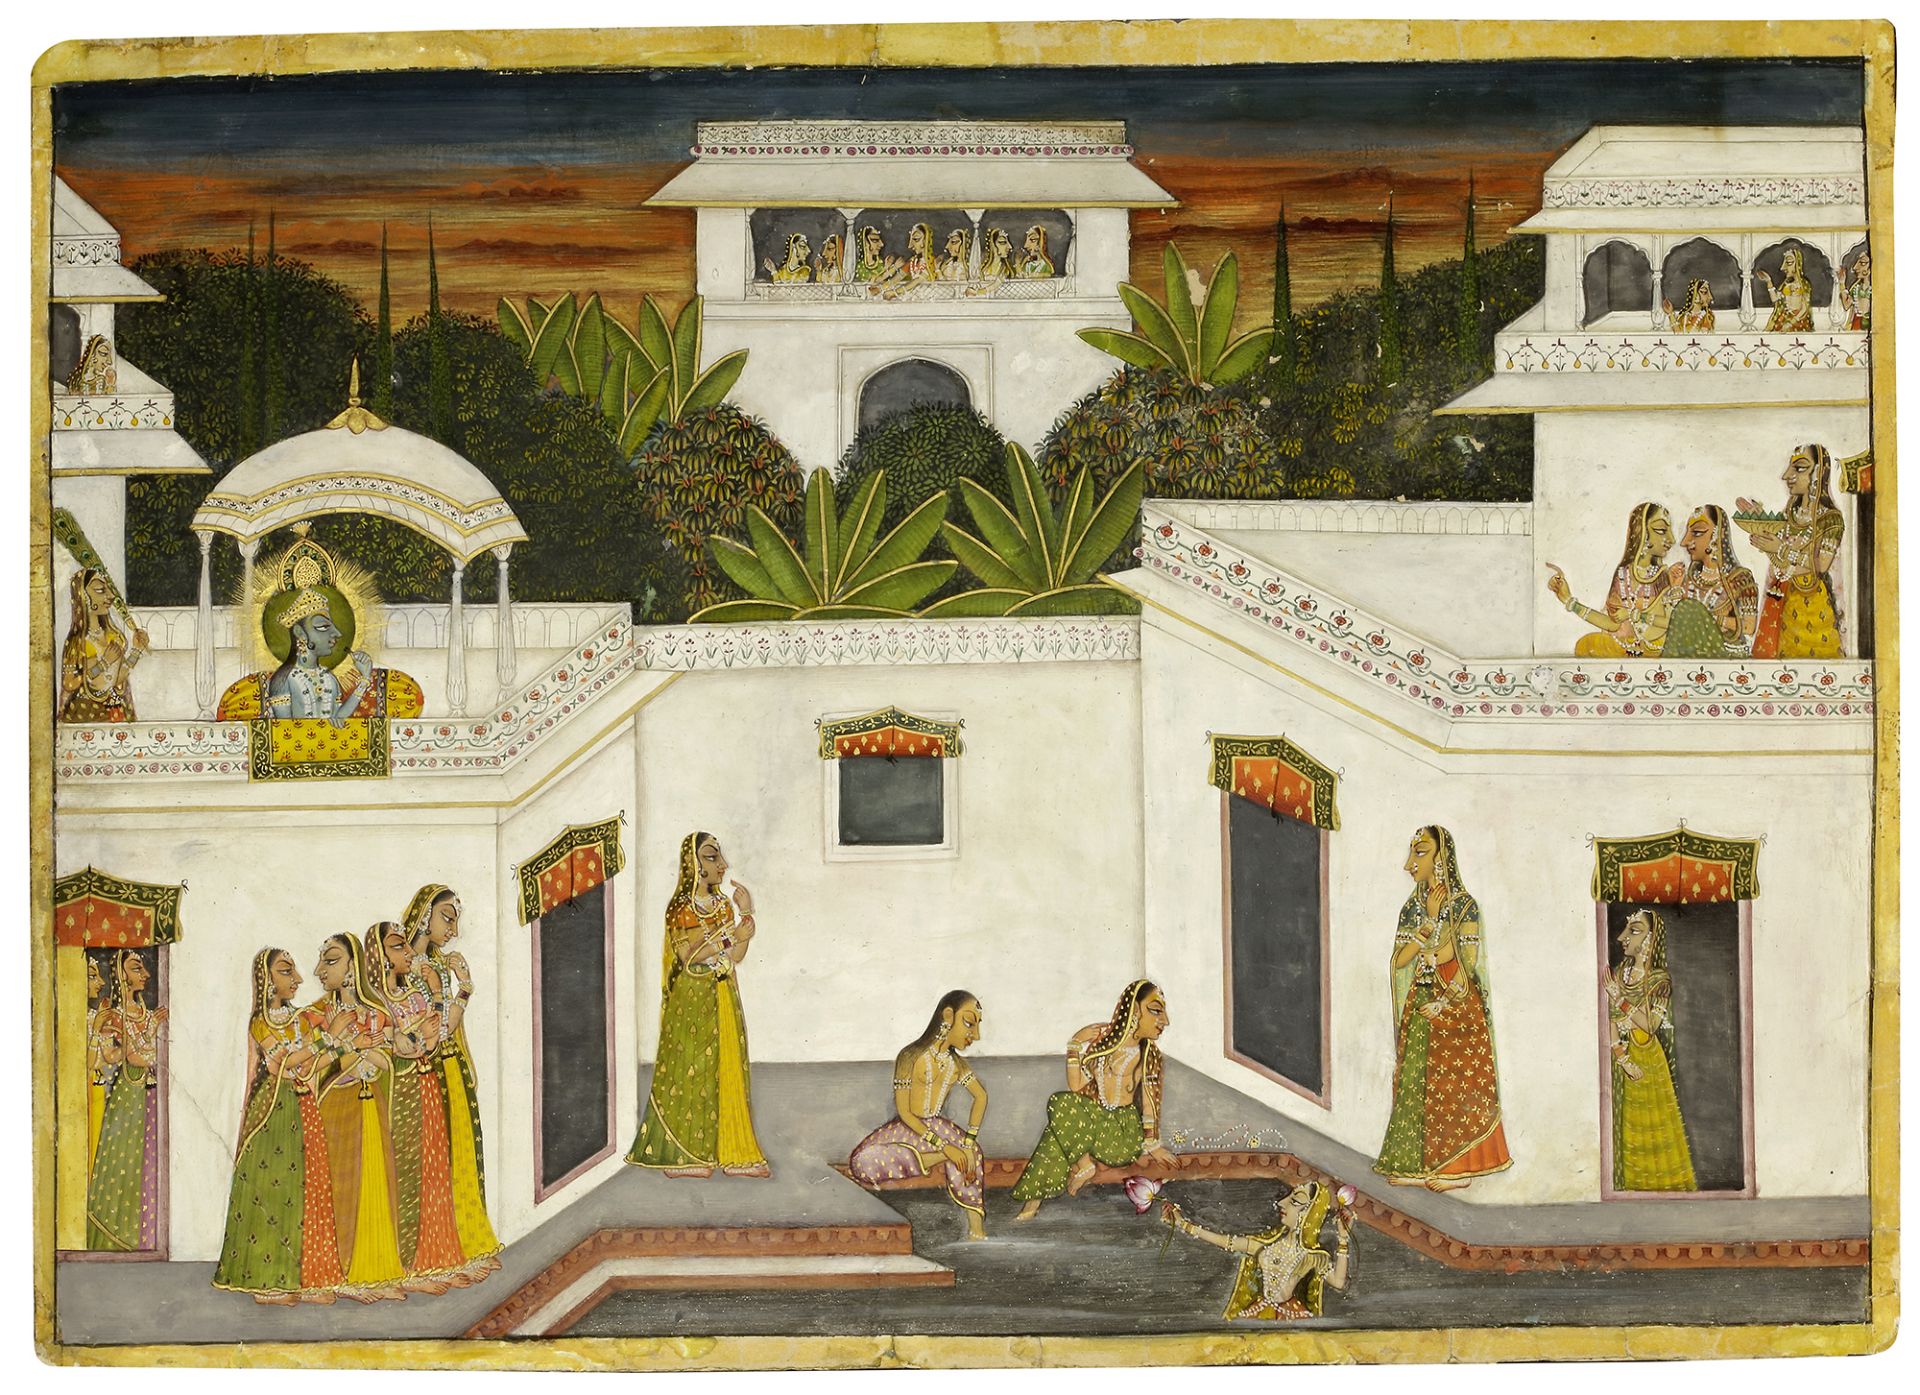 KRISHNA AND RADHA AT A PALACE COURTYARD, KISHANGARH, RAJASTHAN, NORTH WEST INDIA, LATE 18TH CENTURY